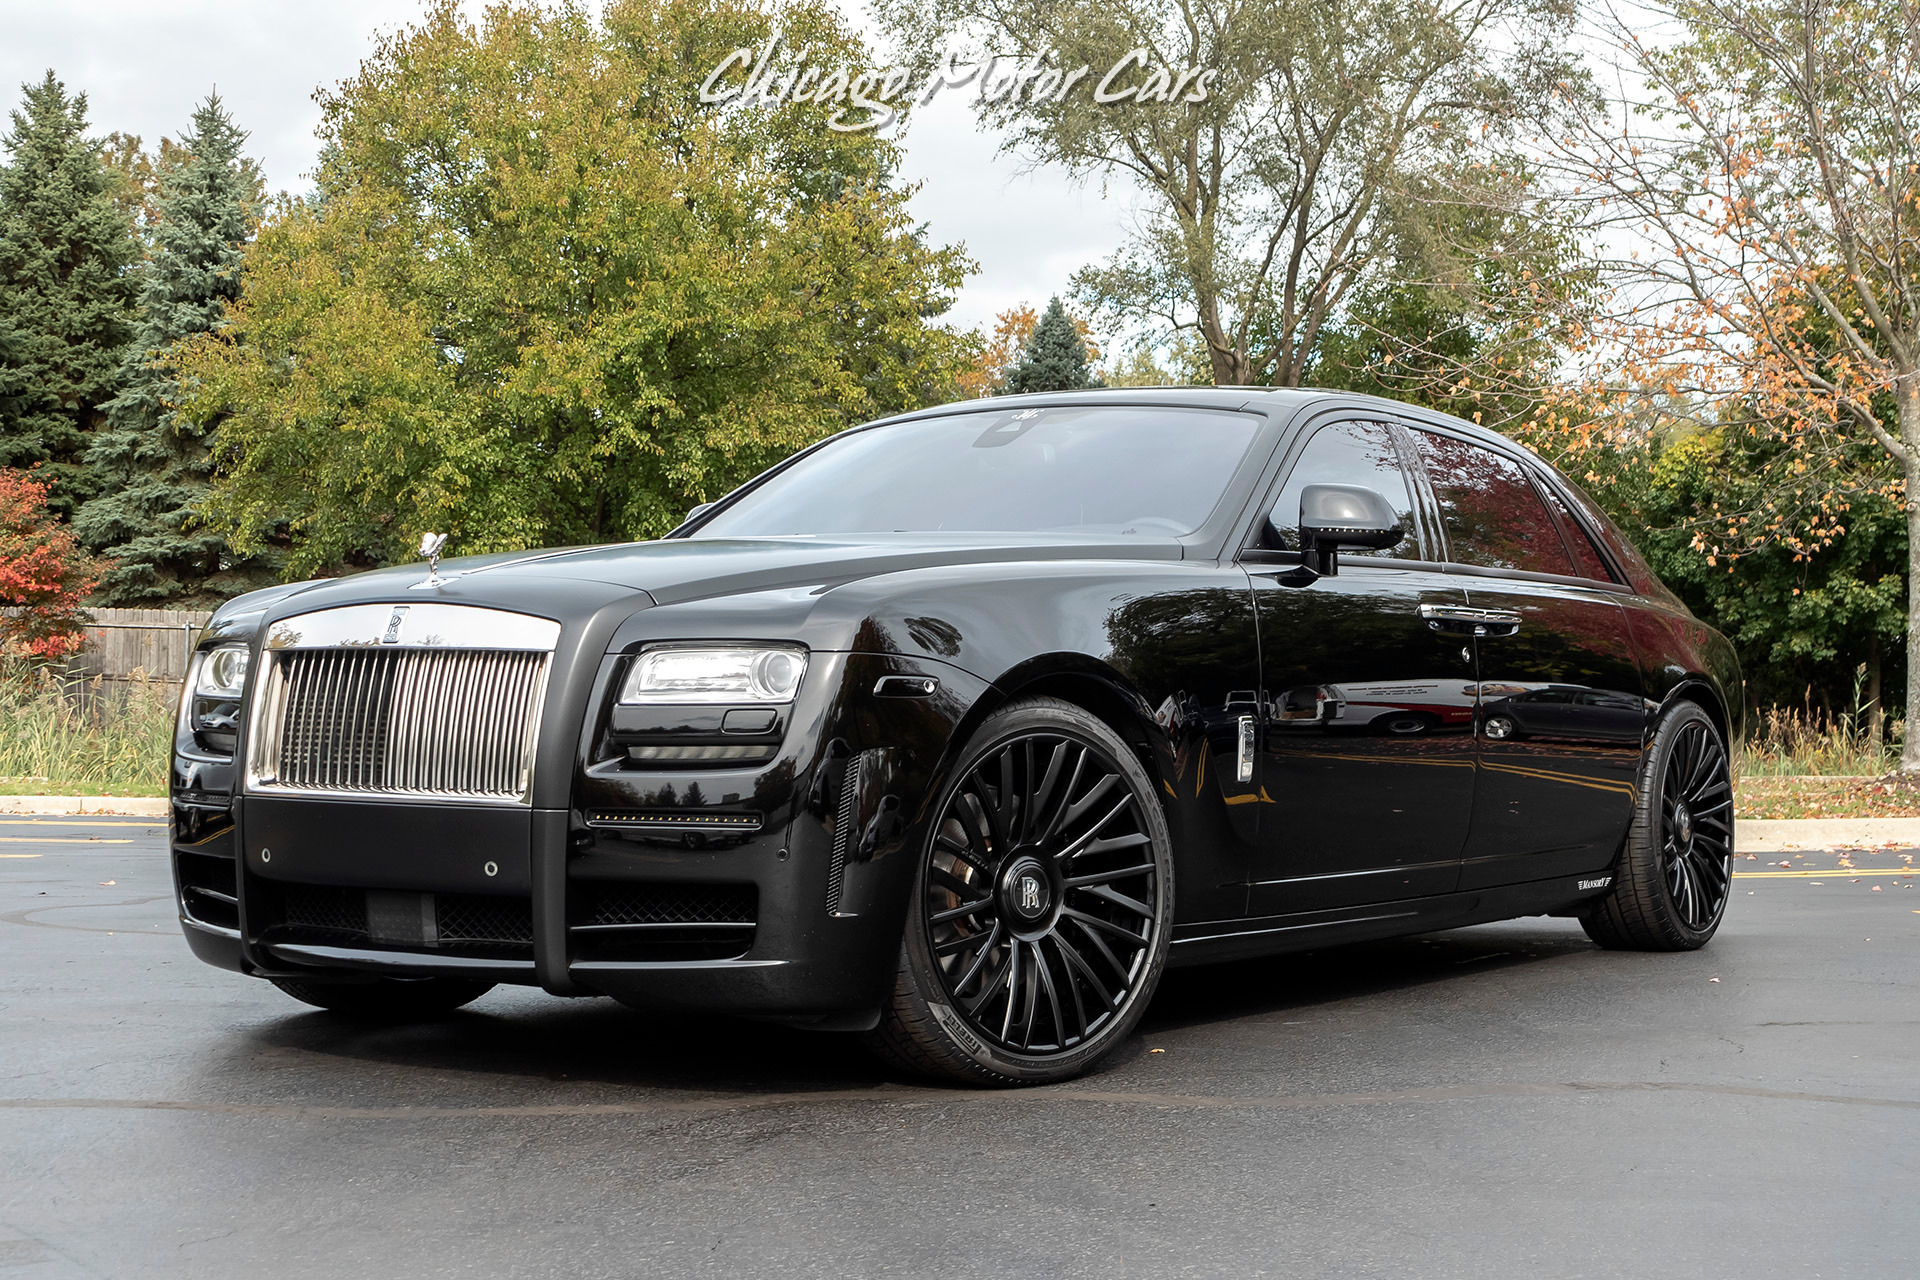 Used 2013 Rolls-Royce Ghost EWB MANSORY Original MSRP $391k+ $60k+ in ...